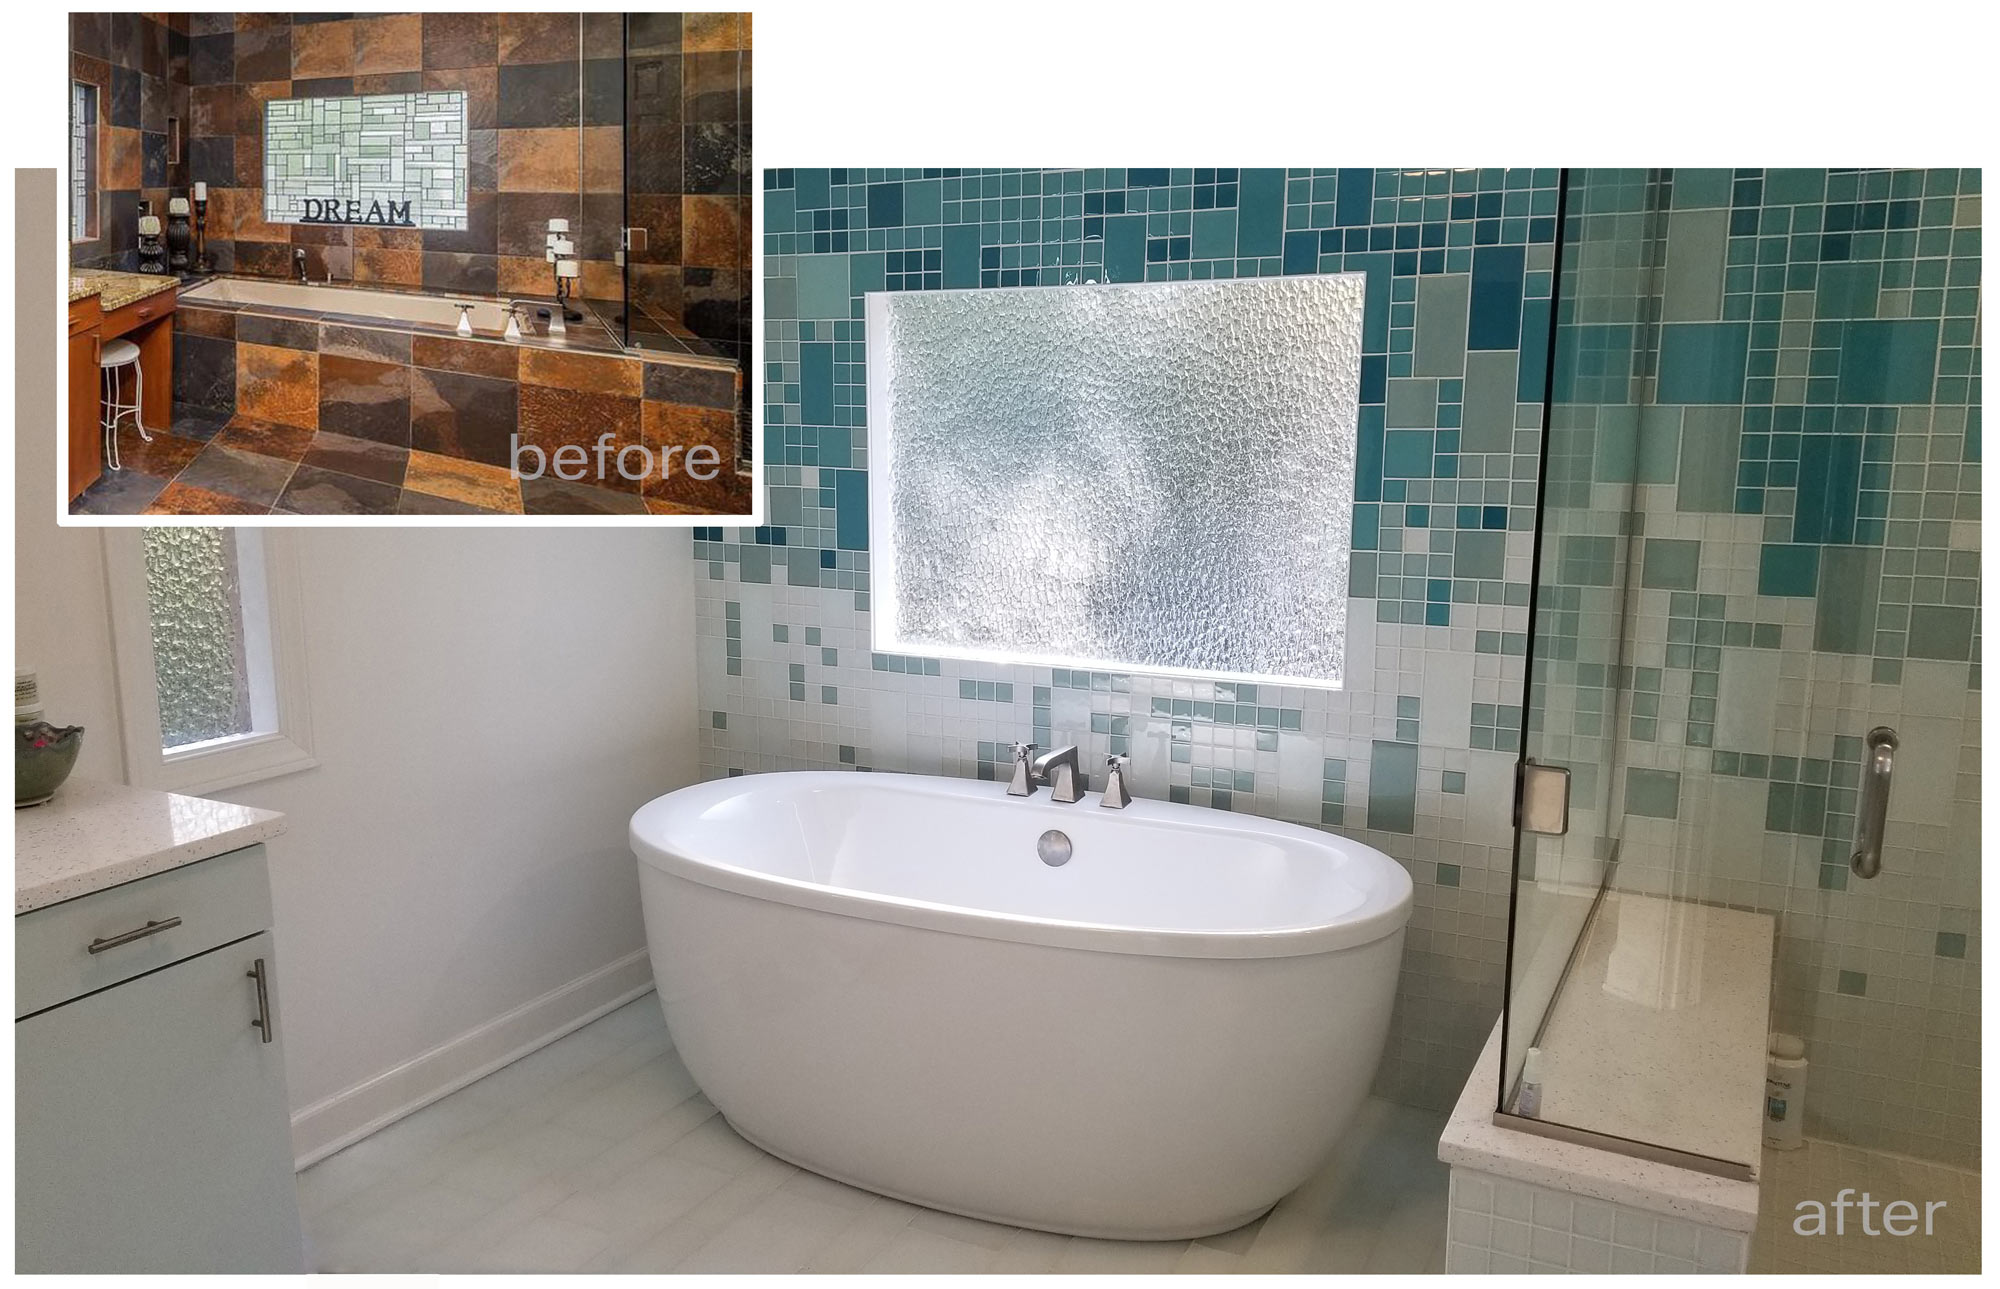 Villi Bathroom Tile - Before and After